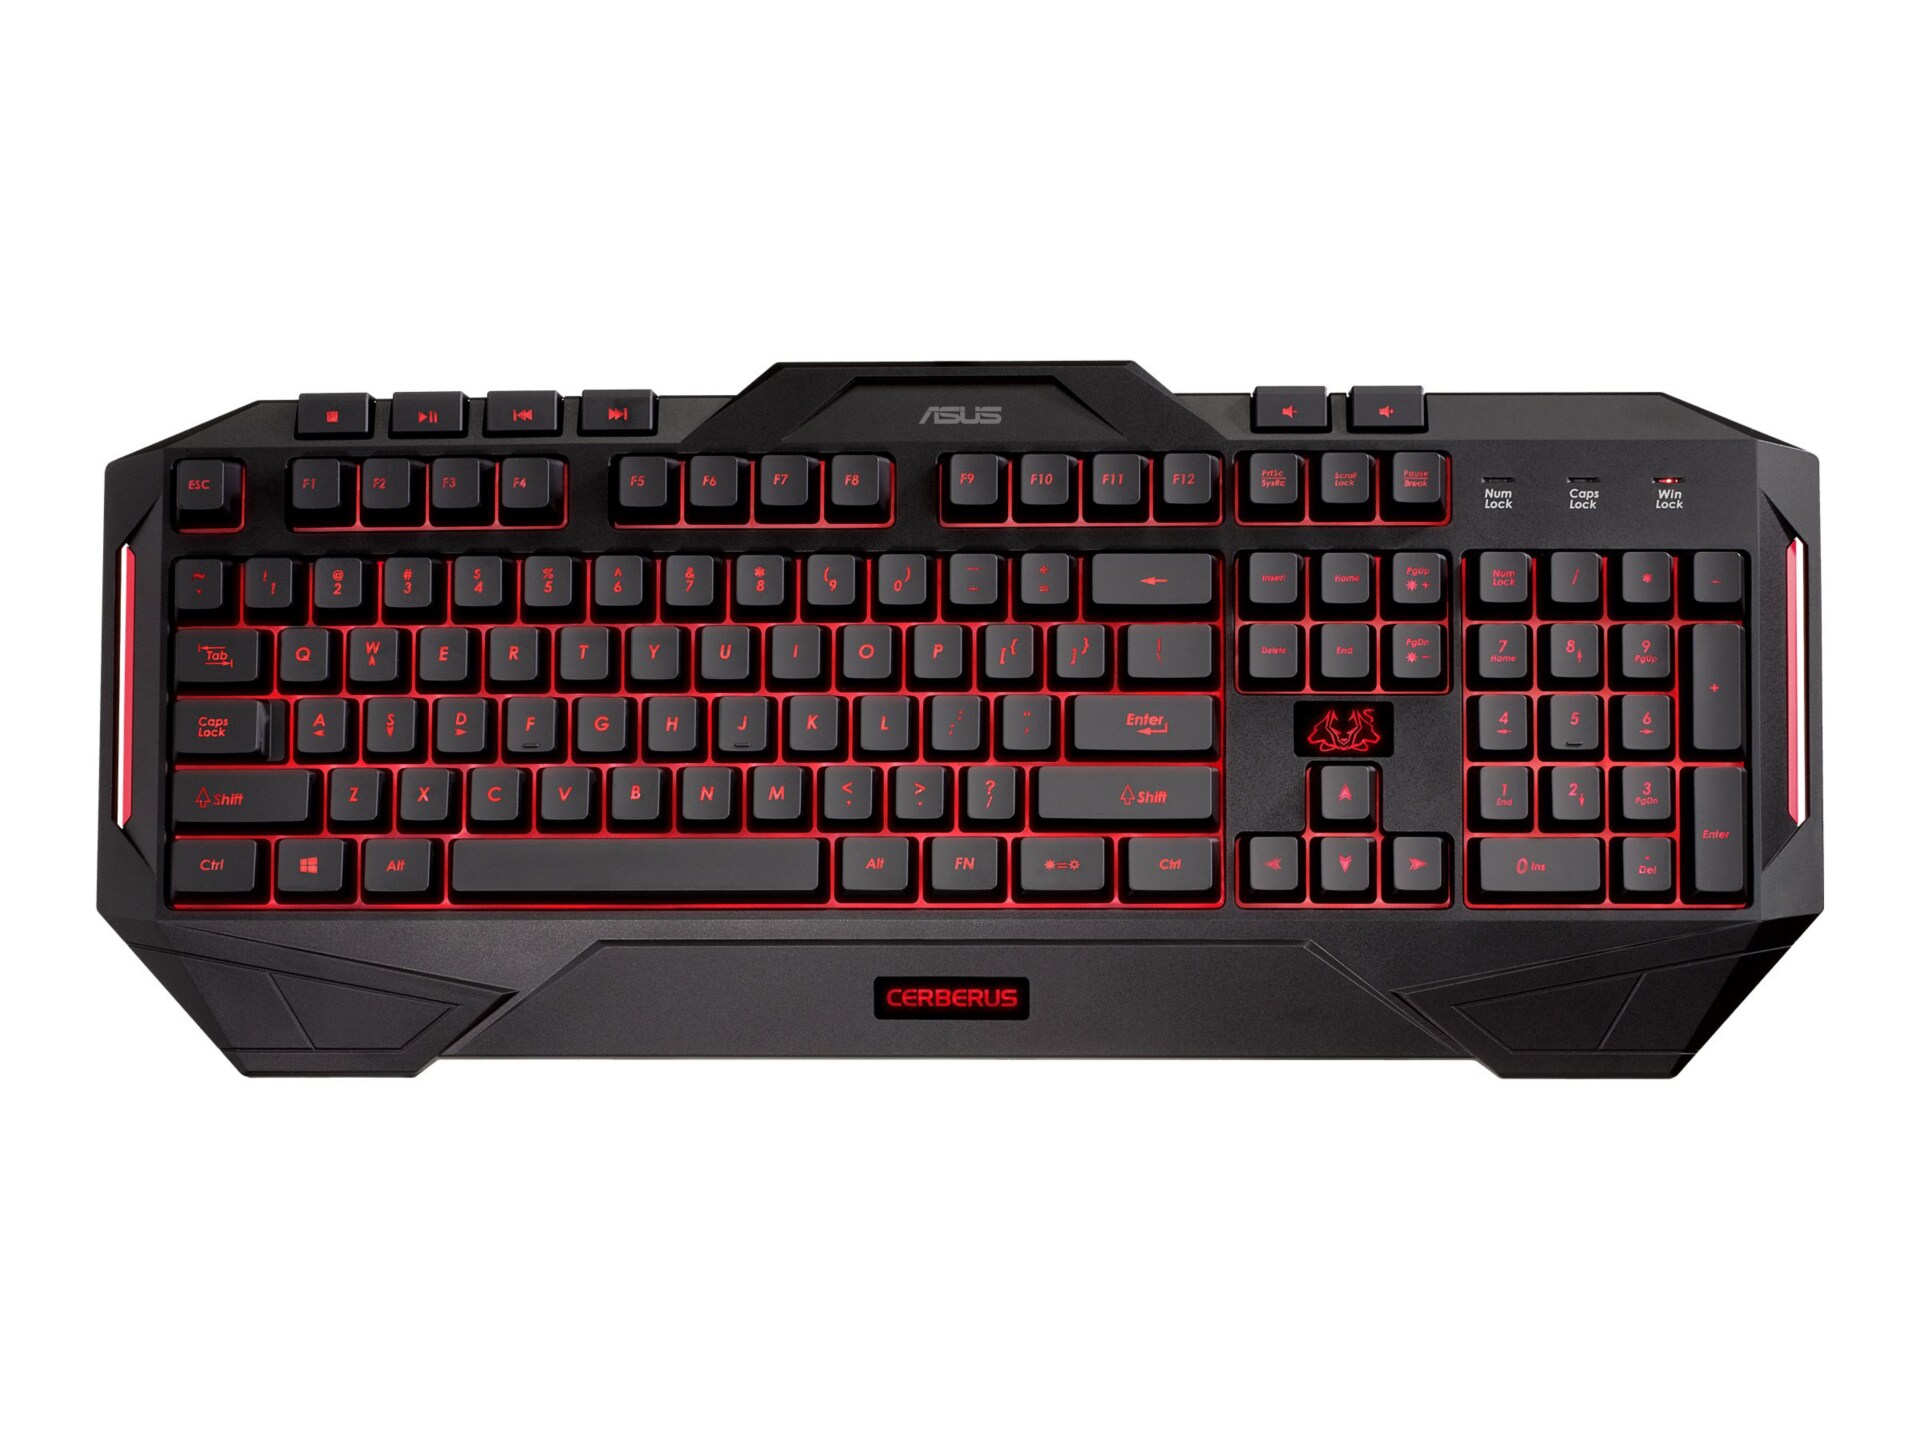 Asus Cerberus Gaming Keyboard + Mouse Combo